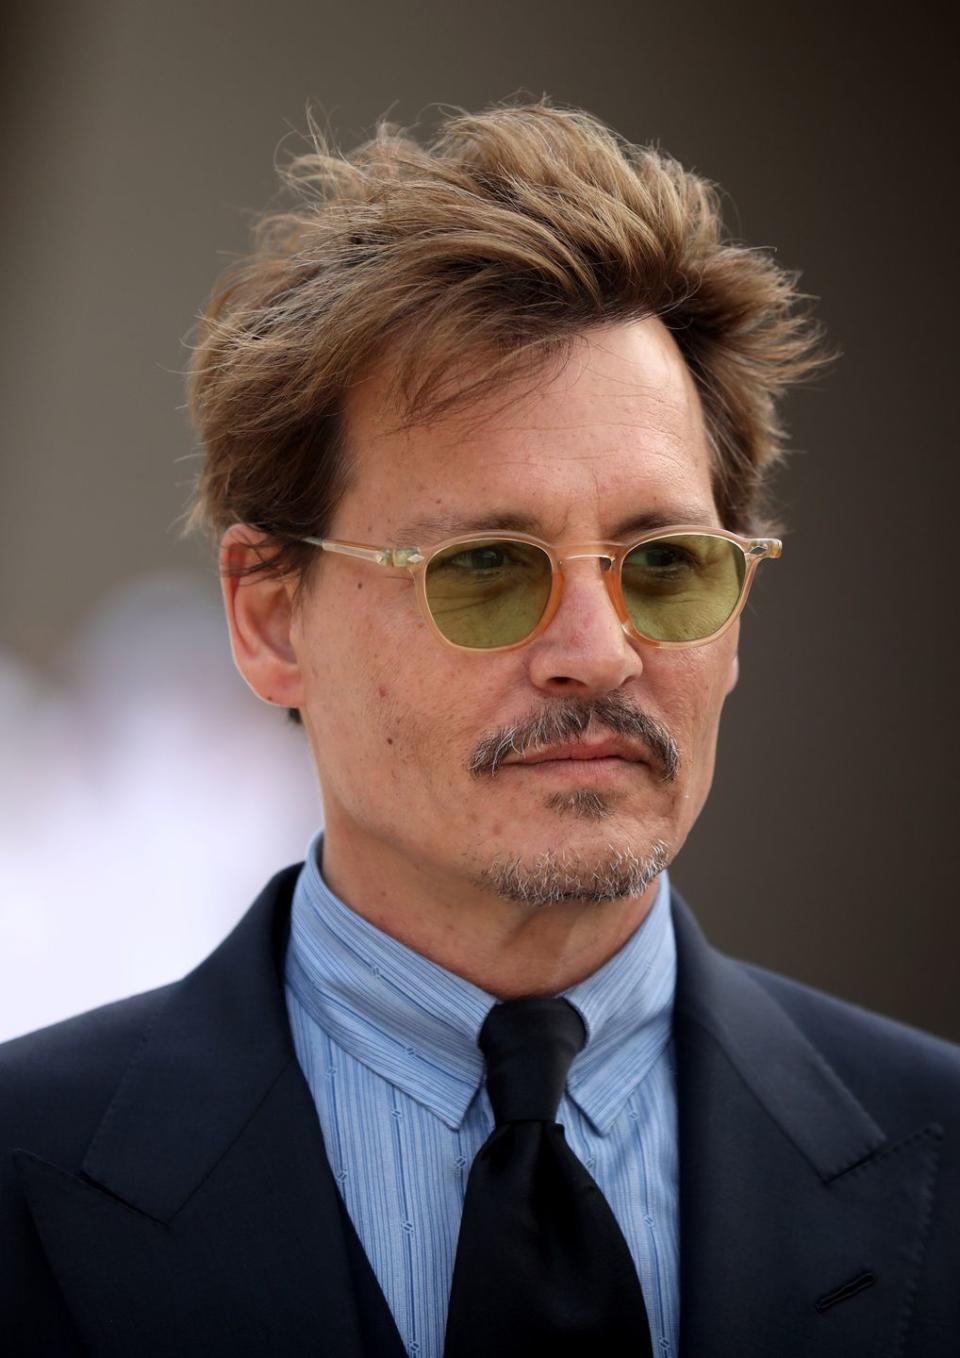 NOW: Johnny Depp